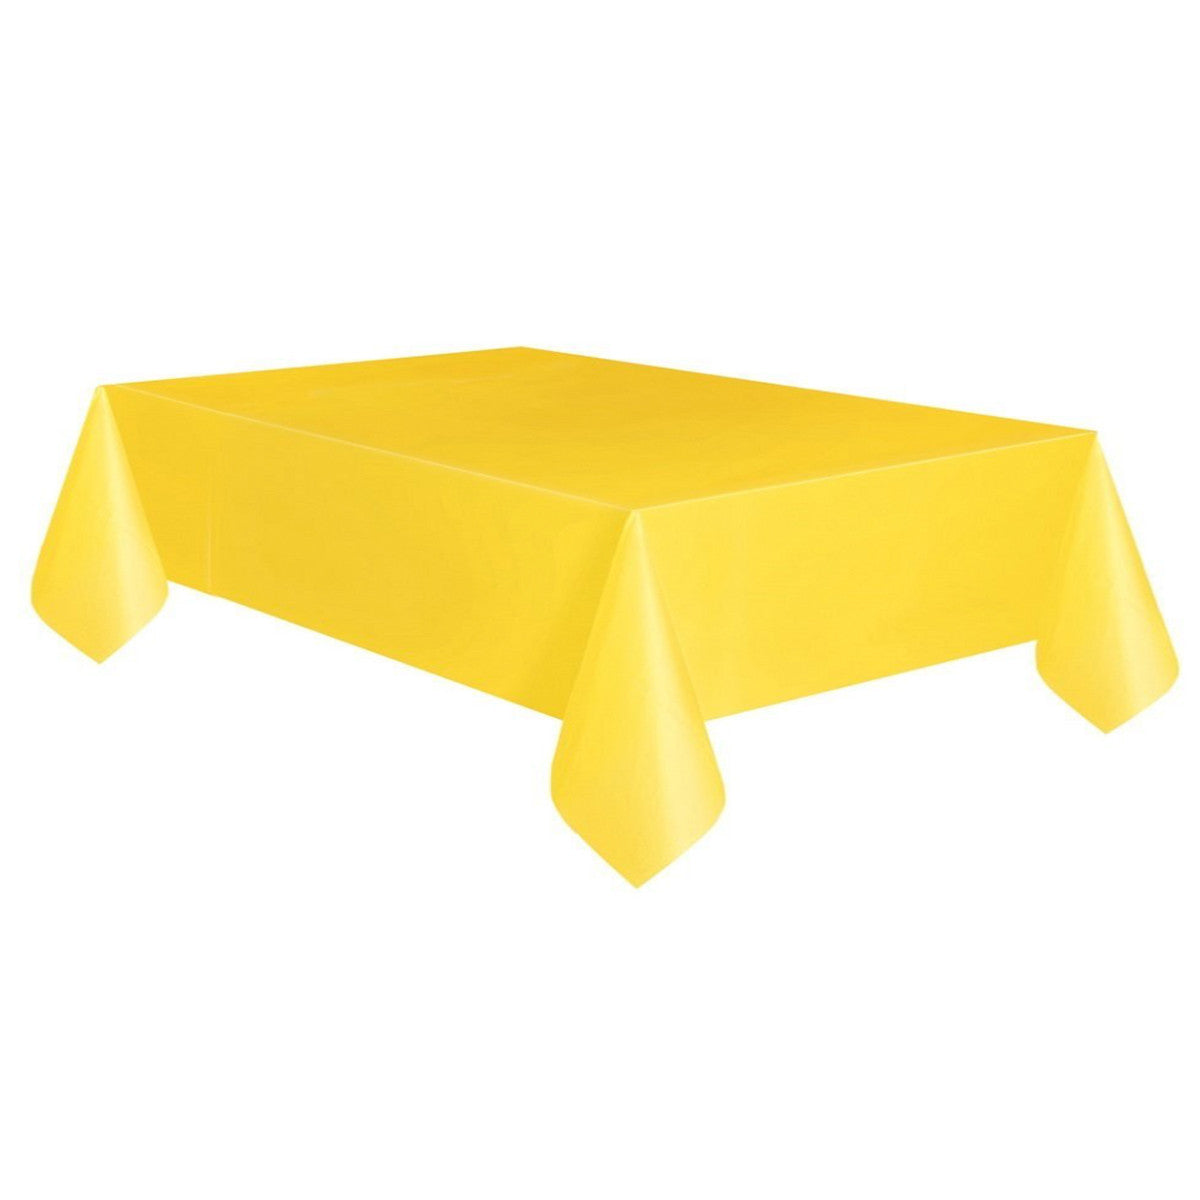 Allgala Table Cover 12-PK Premium Medium Duty Disposable 54"x108" Rectangle Plastic Tablecloth